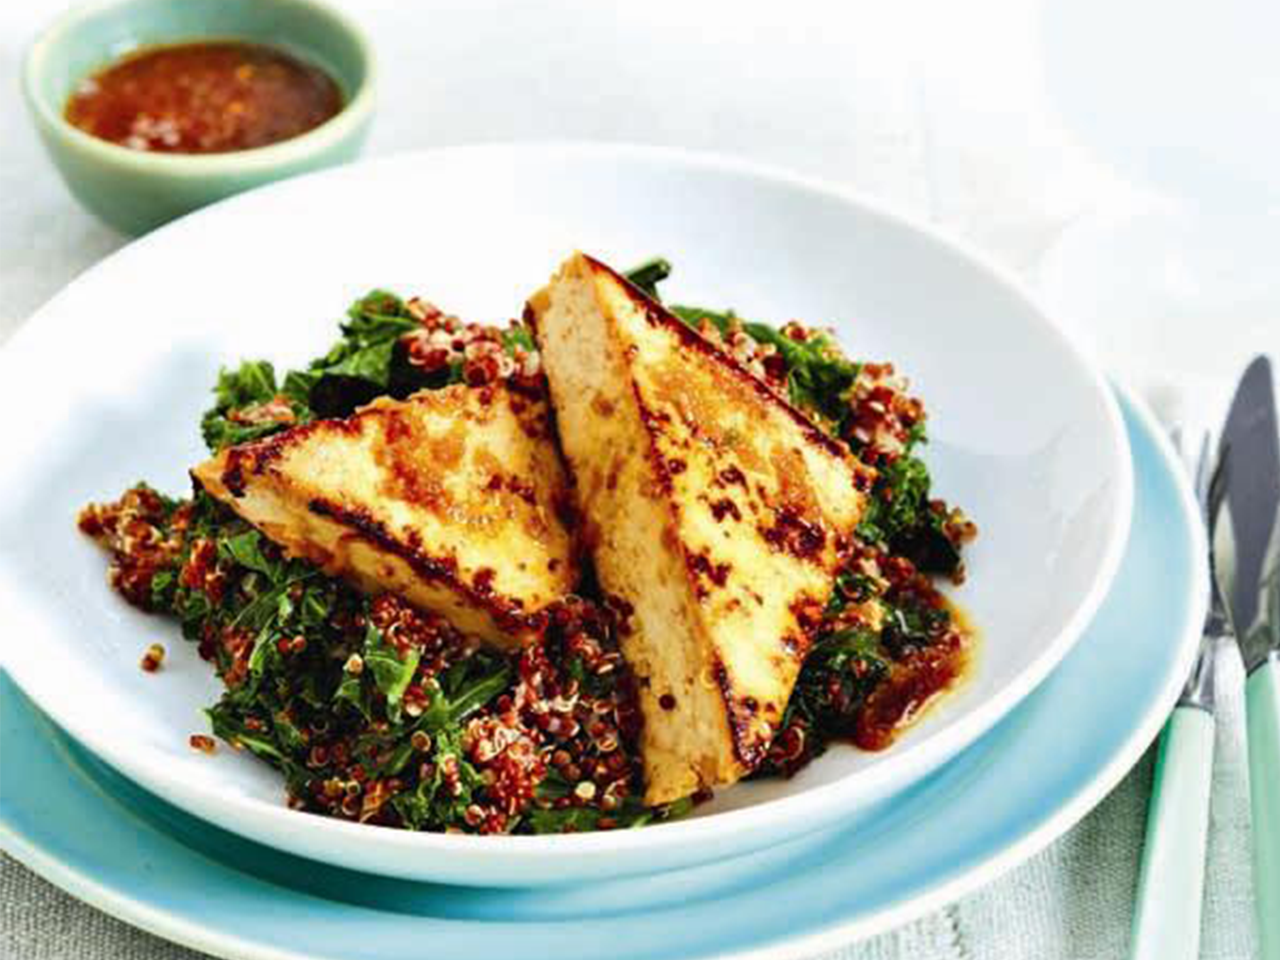 plate of greens and marinated tofu